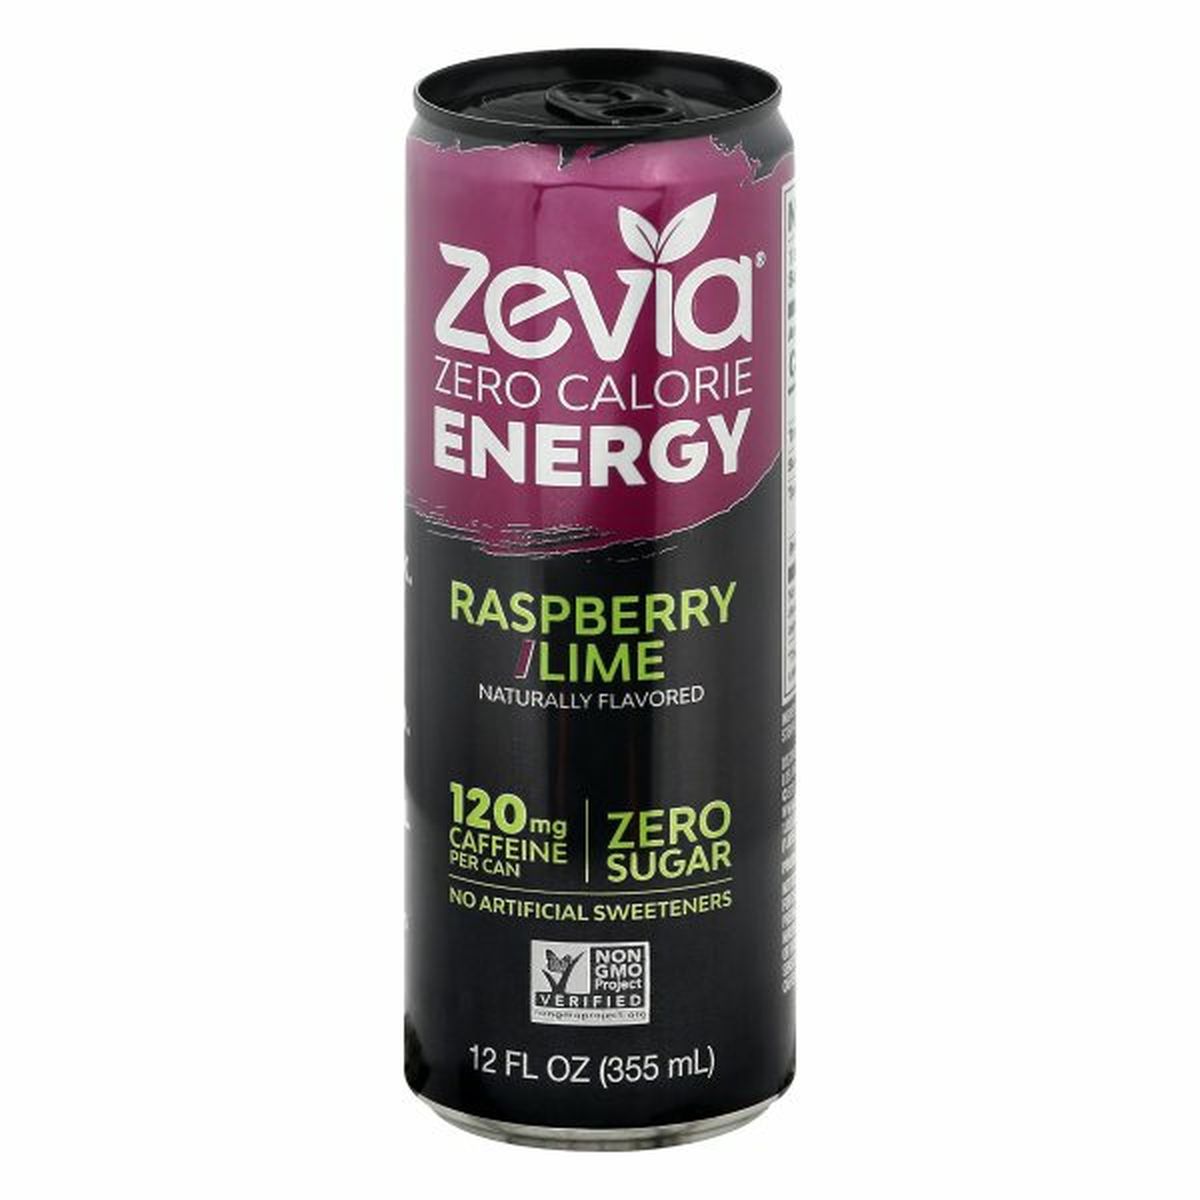 Calories in Zevia Energy Drink, Zero Calorie, Raspberry Lime